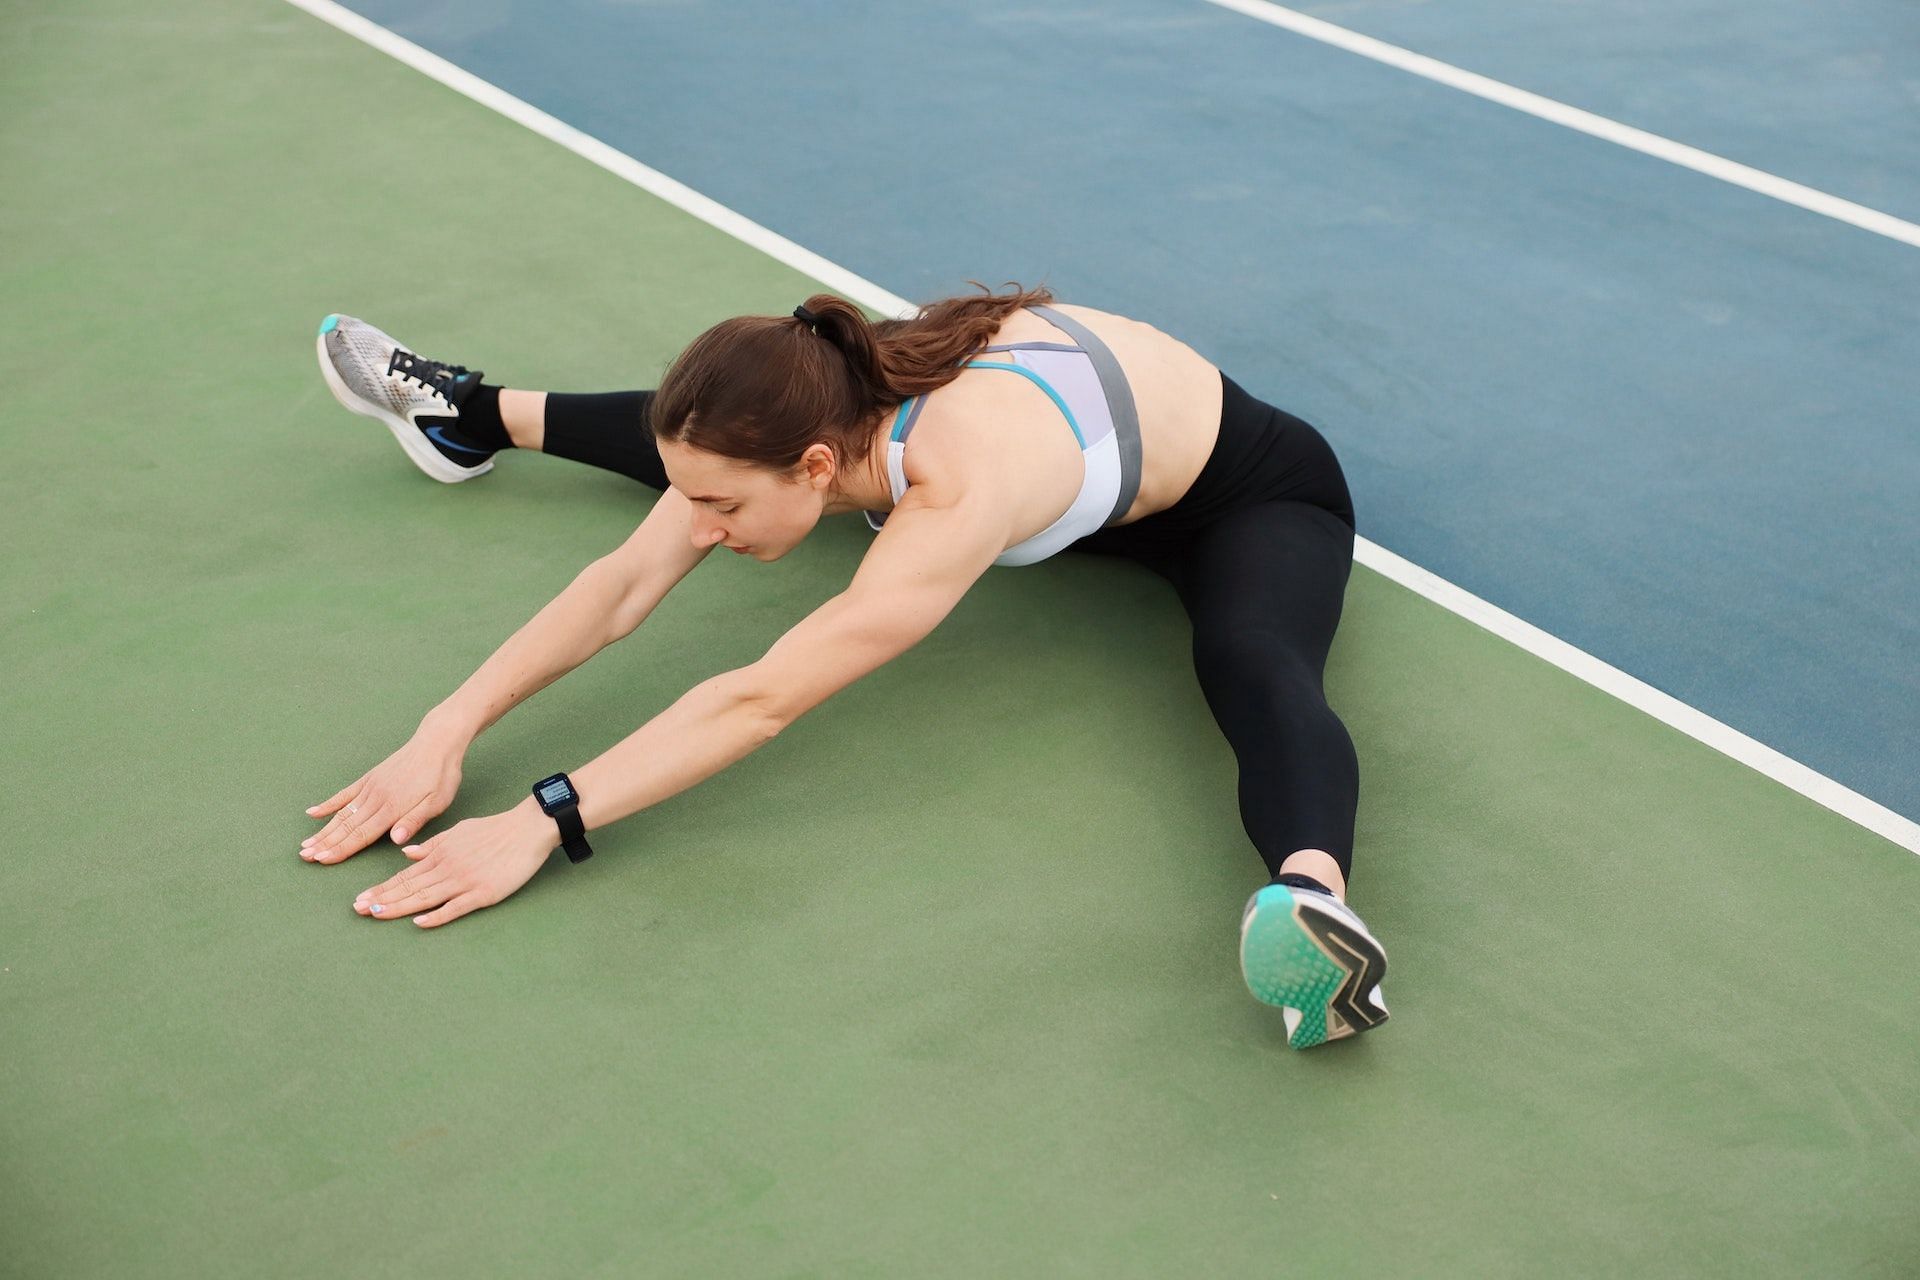 Stretching before running prevents injury. (Photo via Pexels/Maksim Goncharenok)